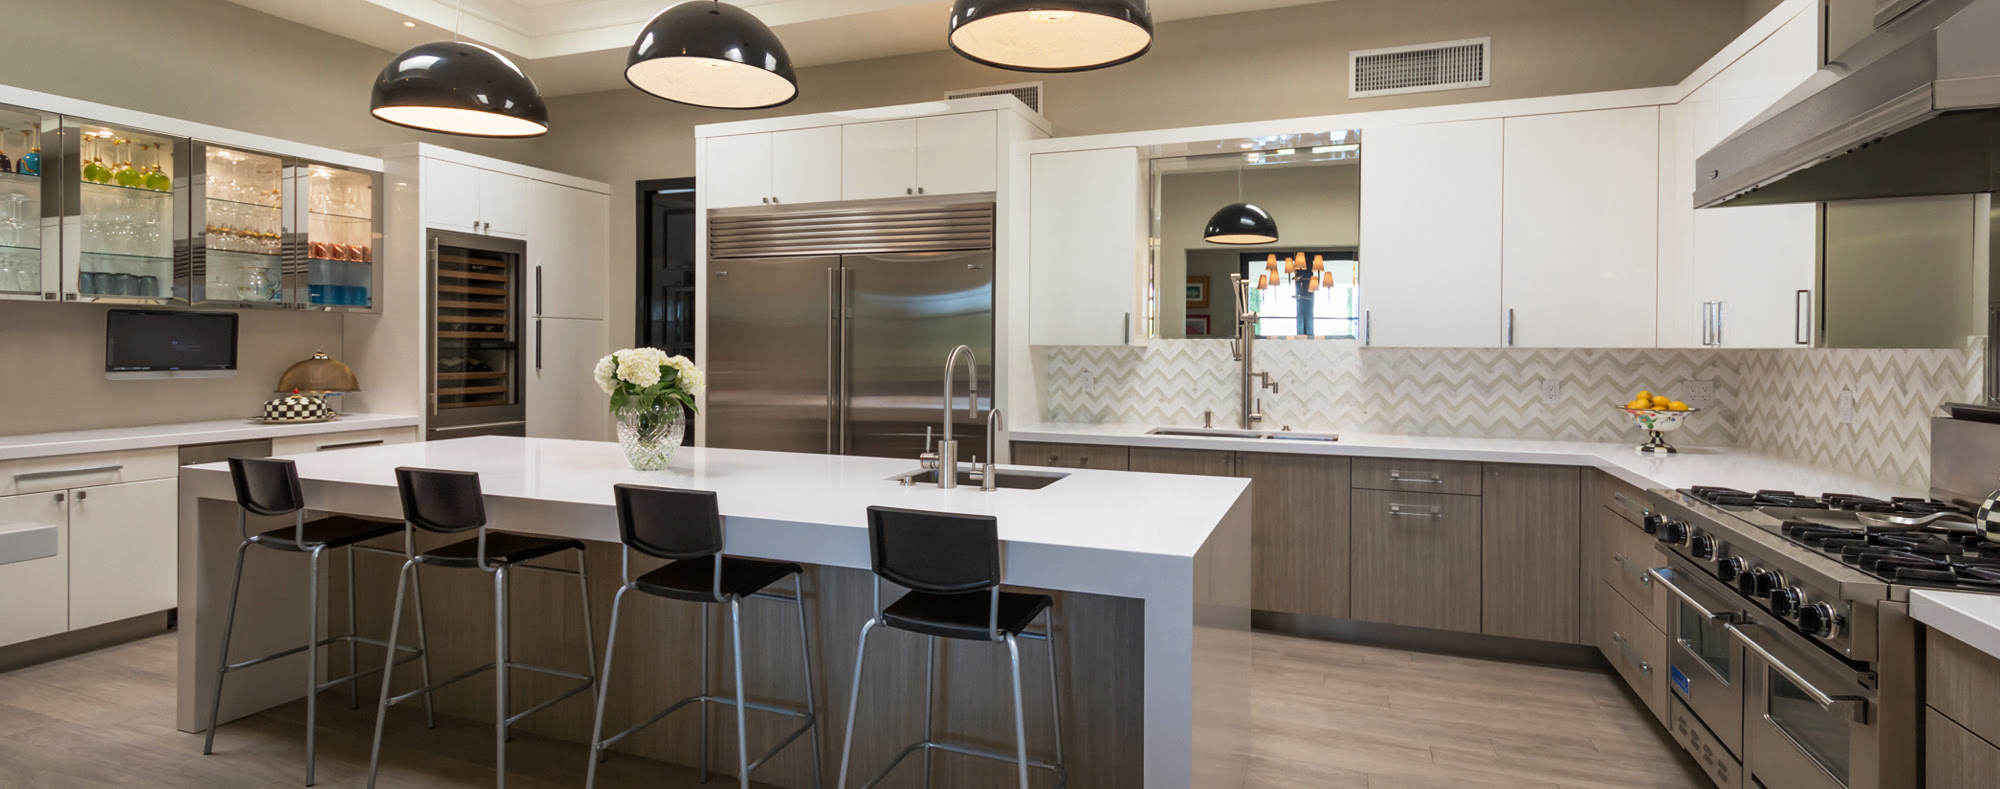 Kitchen And Bath Remodelers | Interior Design